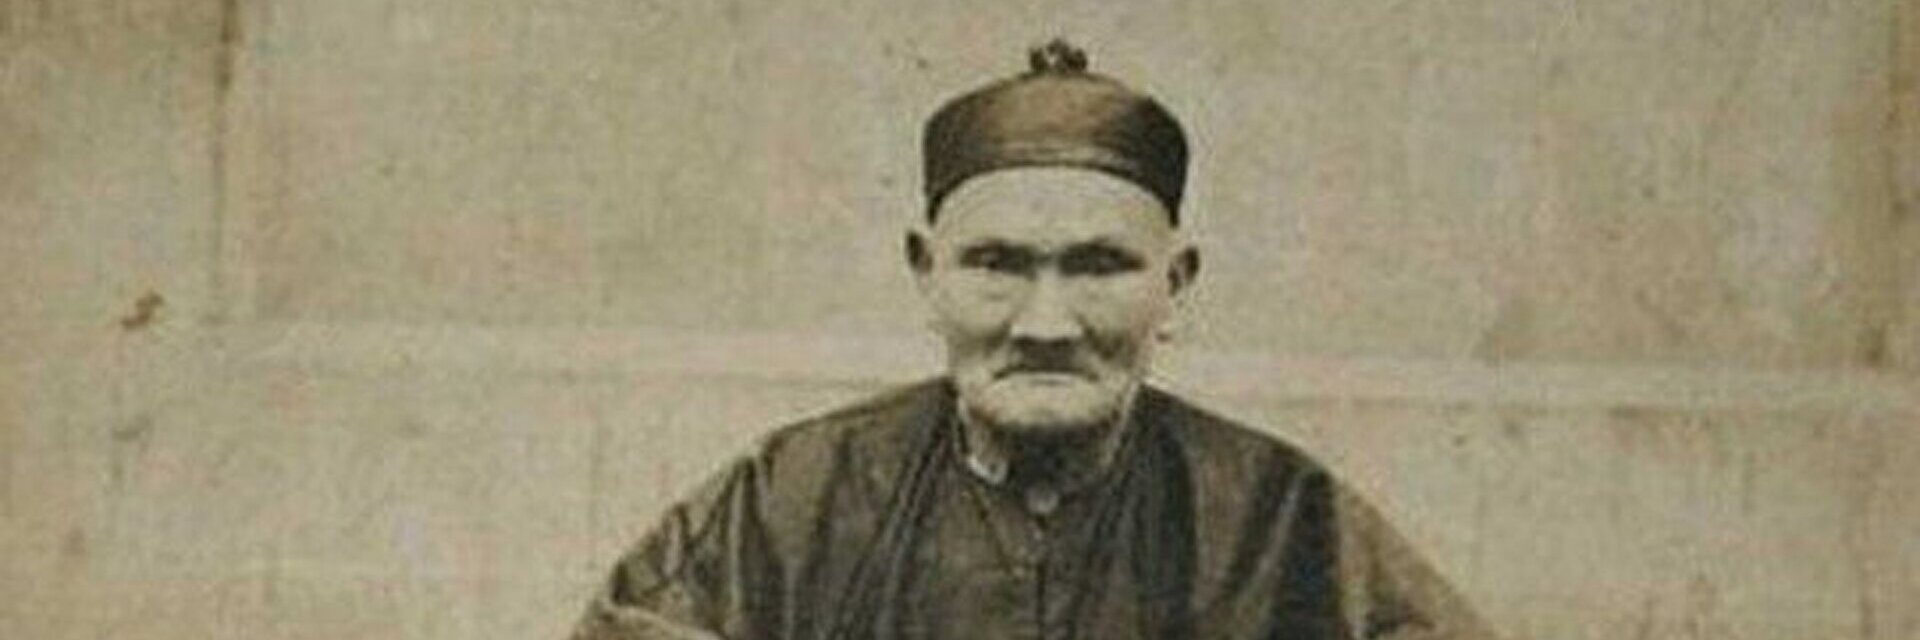 Человек проживший 900 лет. Ли Цинъюнь (1677—1933). Ли Цинъюнь долгожитель. Ли Чинг-Юн долгожитель. Ли Цинъюнь 256 лет.